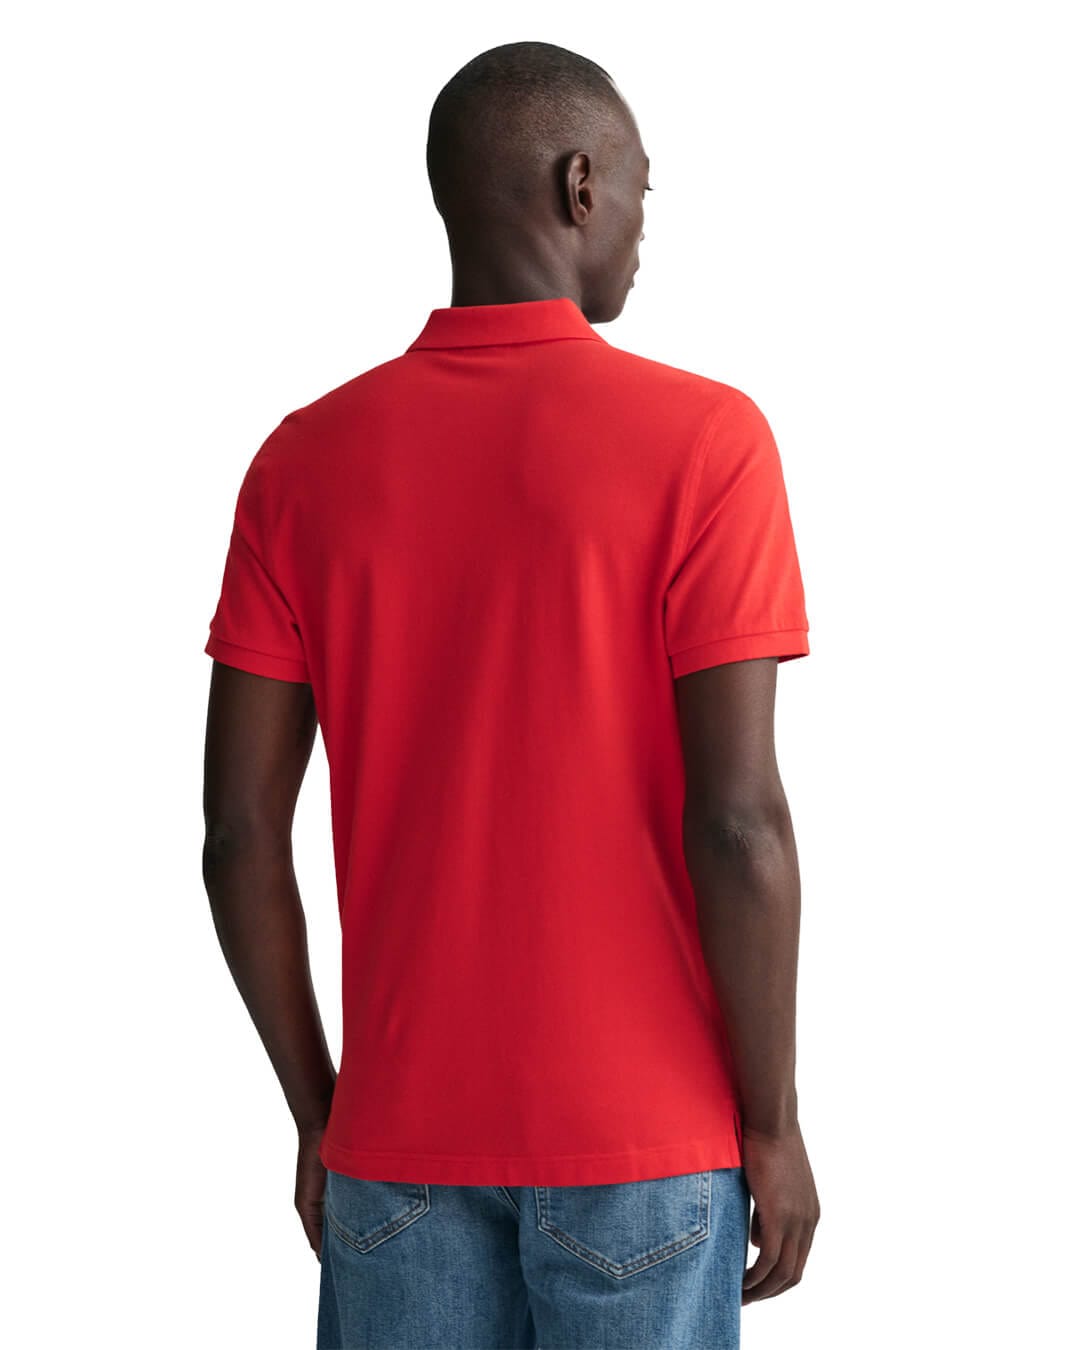 Gant Polo Shirts Gant Original Piqué Red Polo Shirt